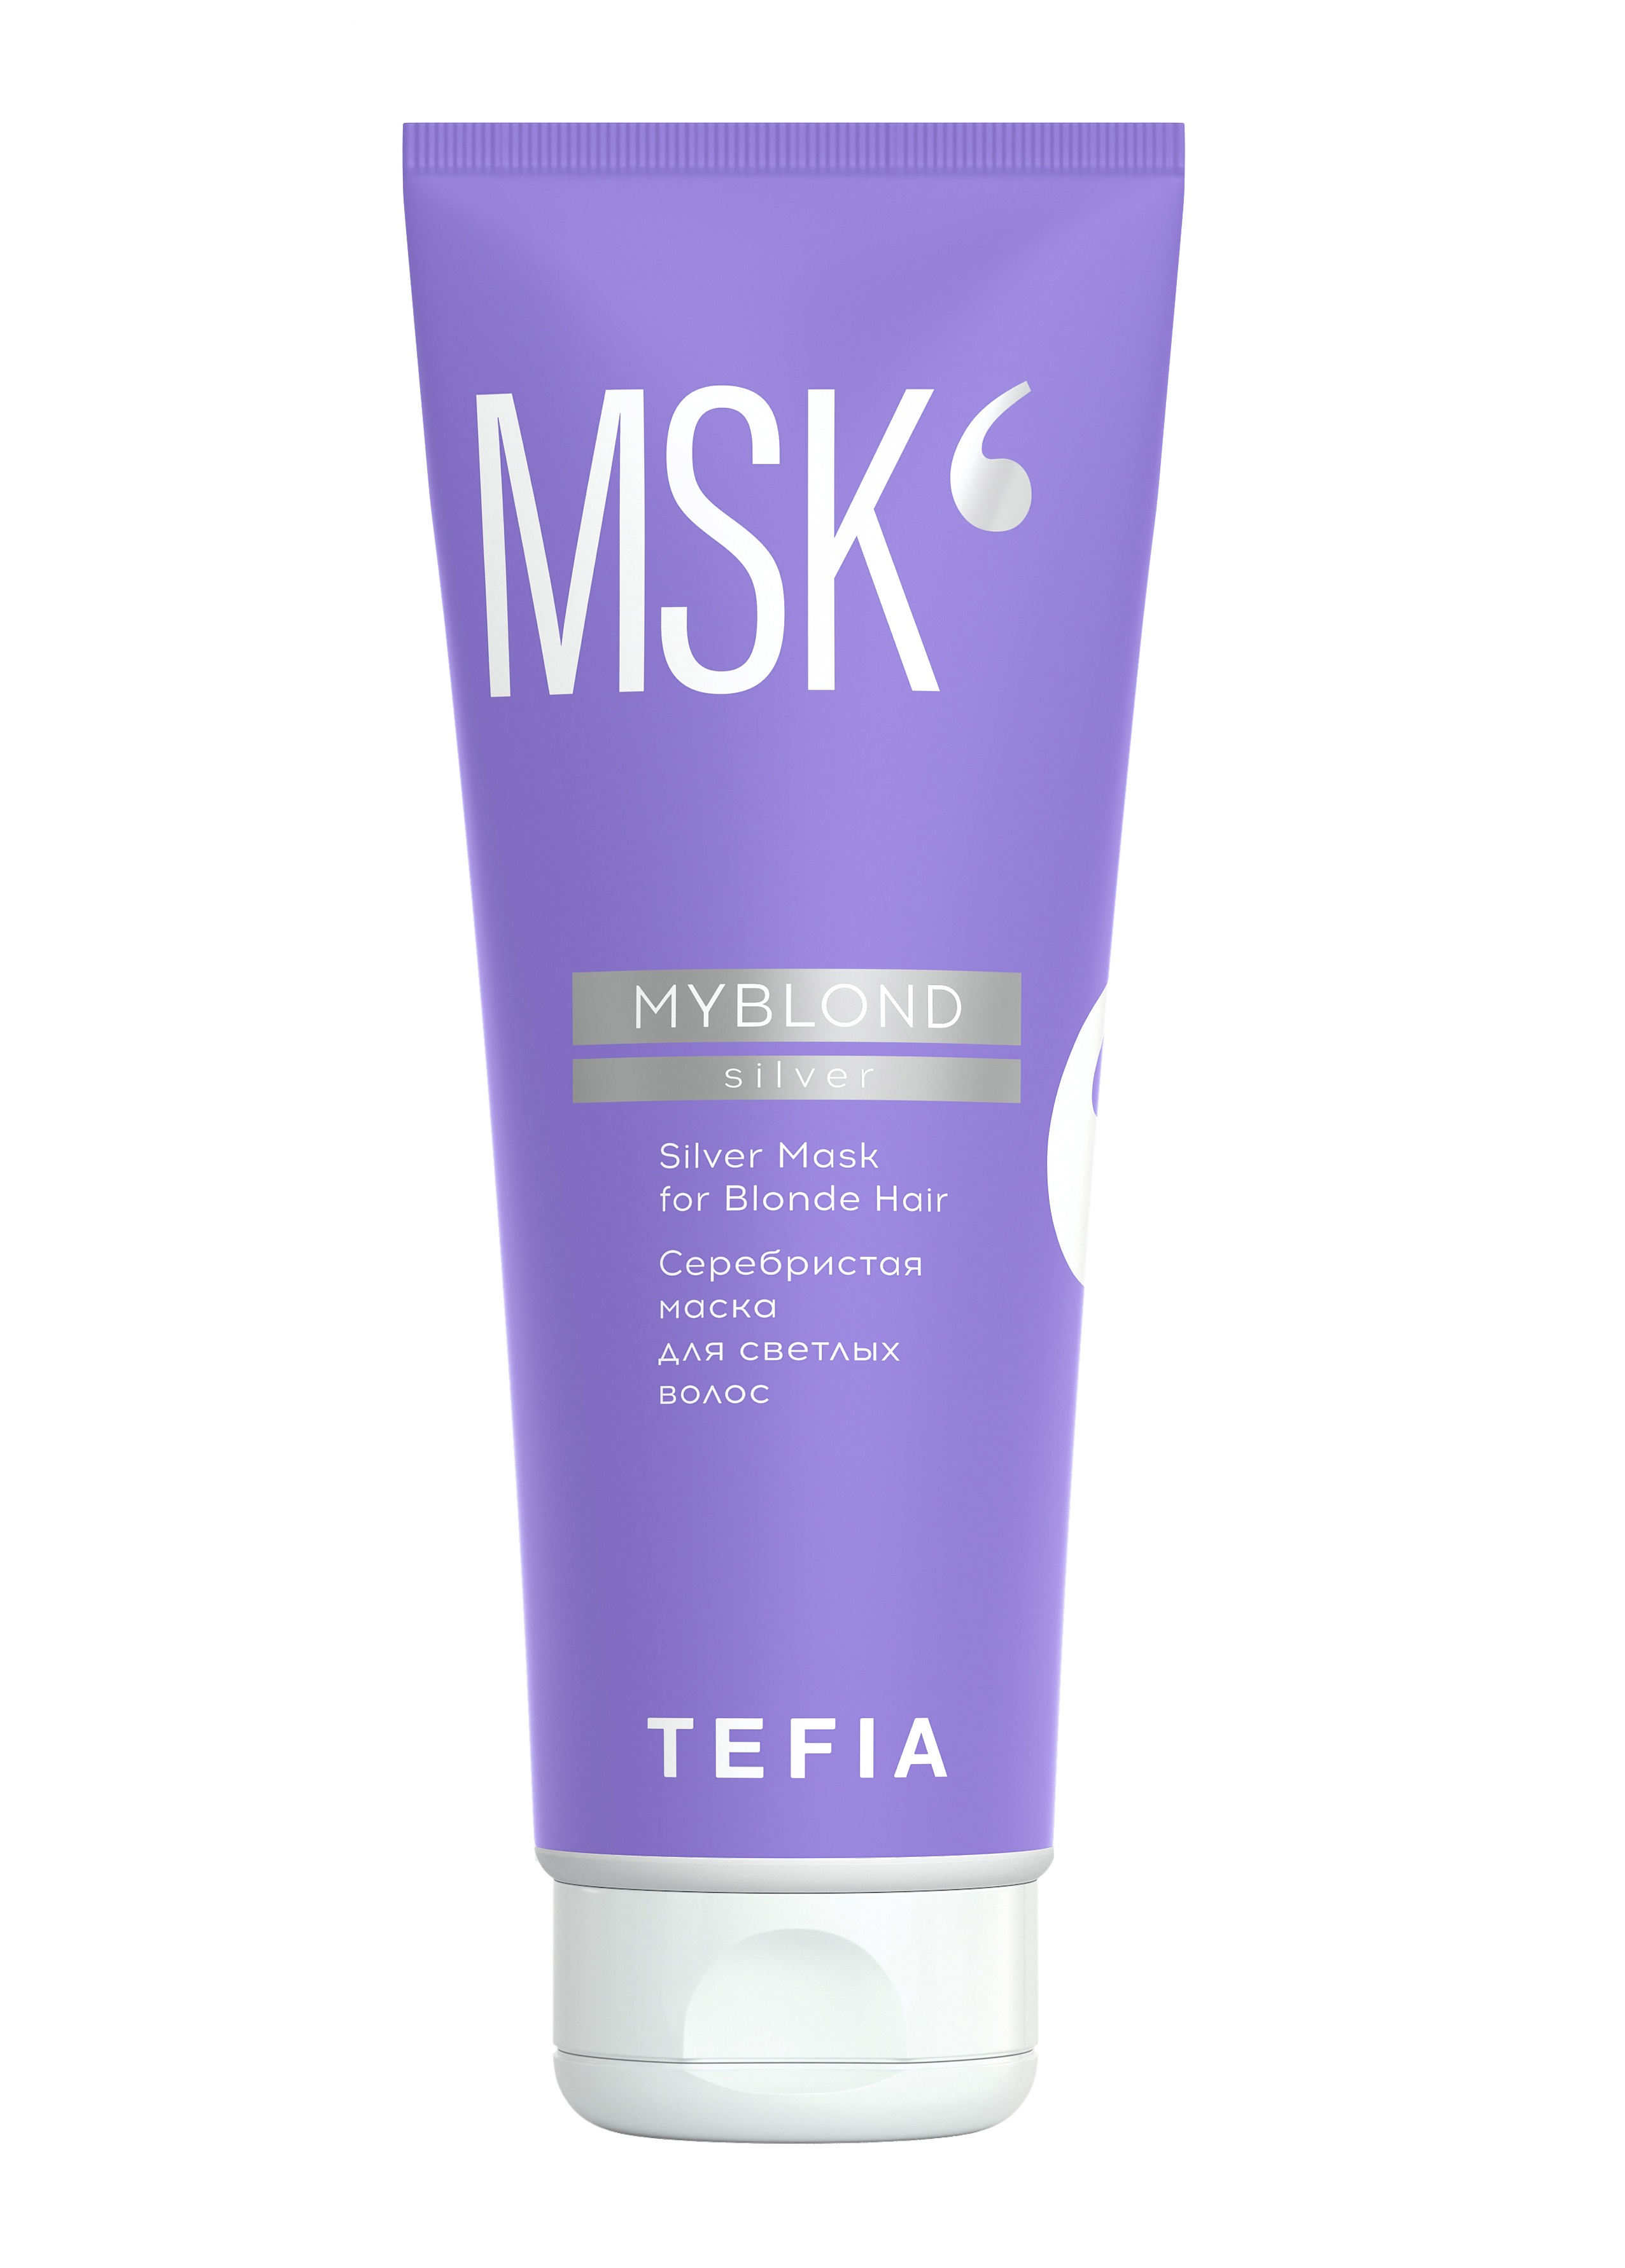 Купить Маска TEFIA серебристая для светлых волос Silver Mask for Blonde Hair 250мл, Линия MYBLOND